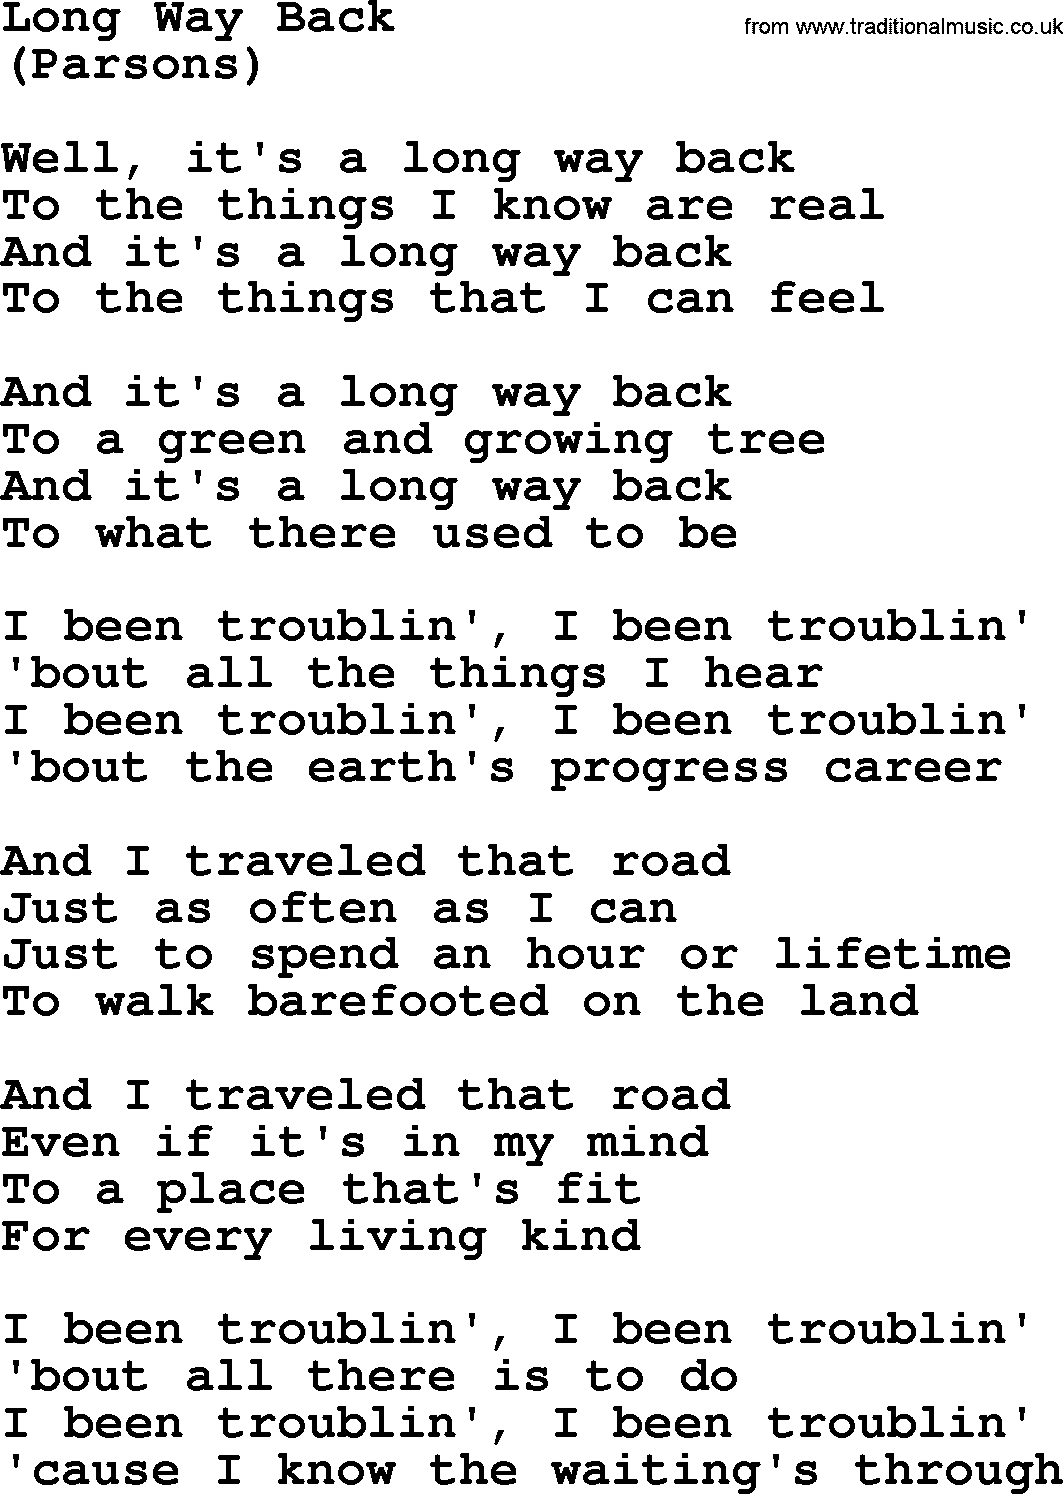 The Byrds song Long Way Back, lyrics